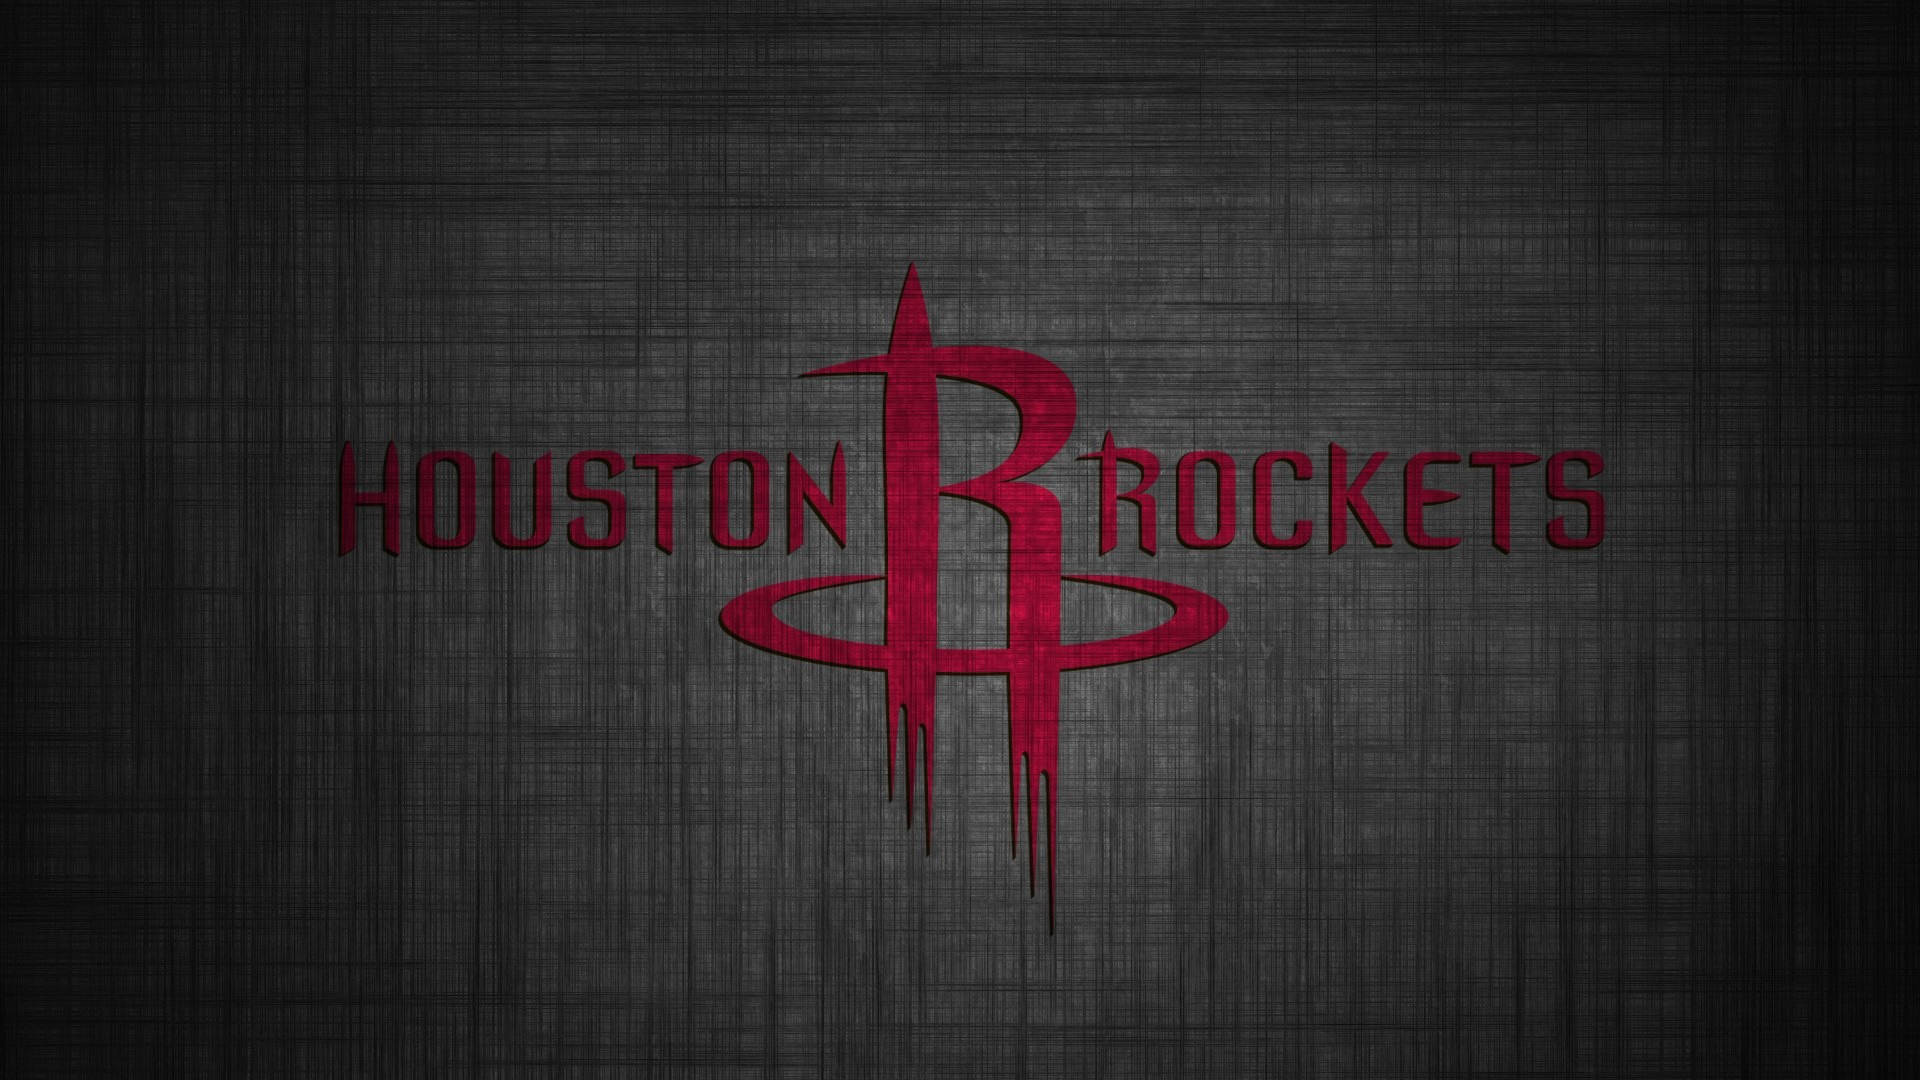 Houstonrockets Dunkles Emblem Wallpaper